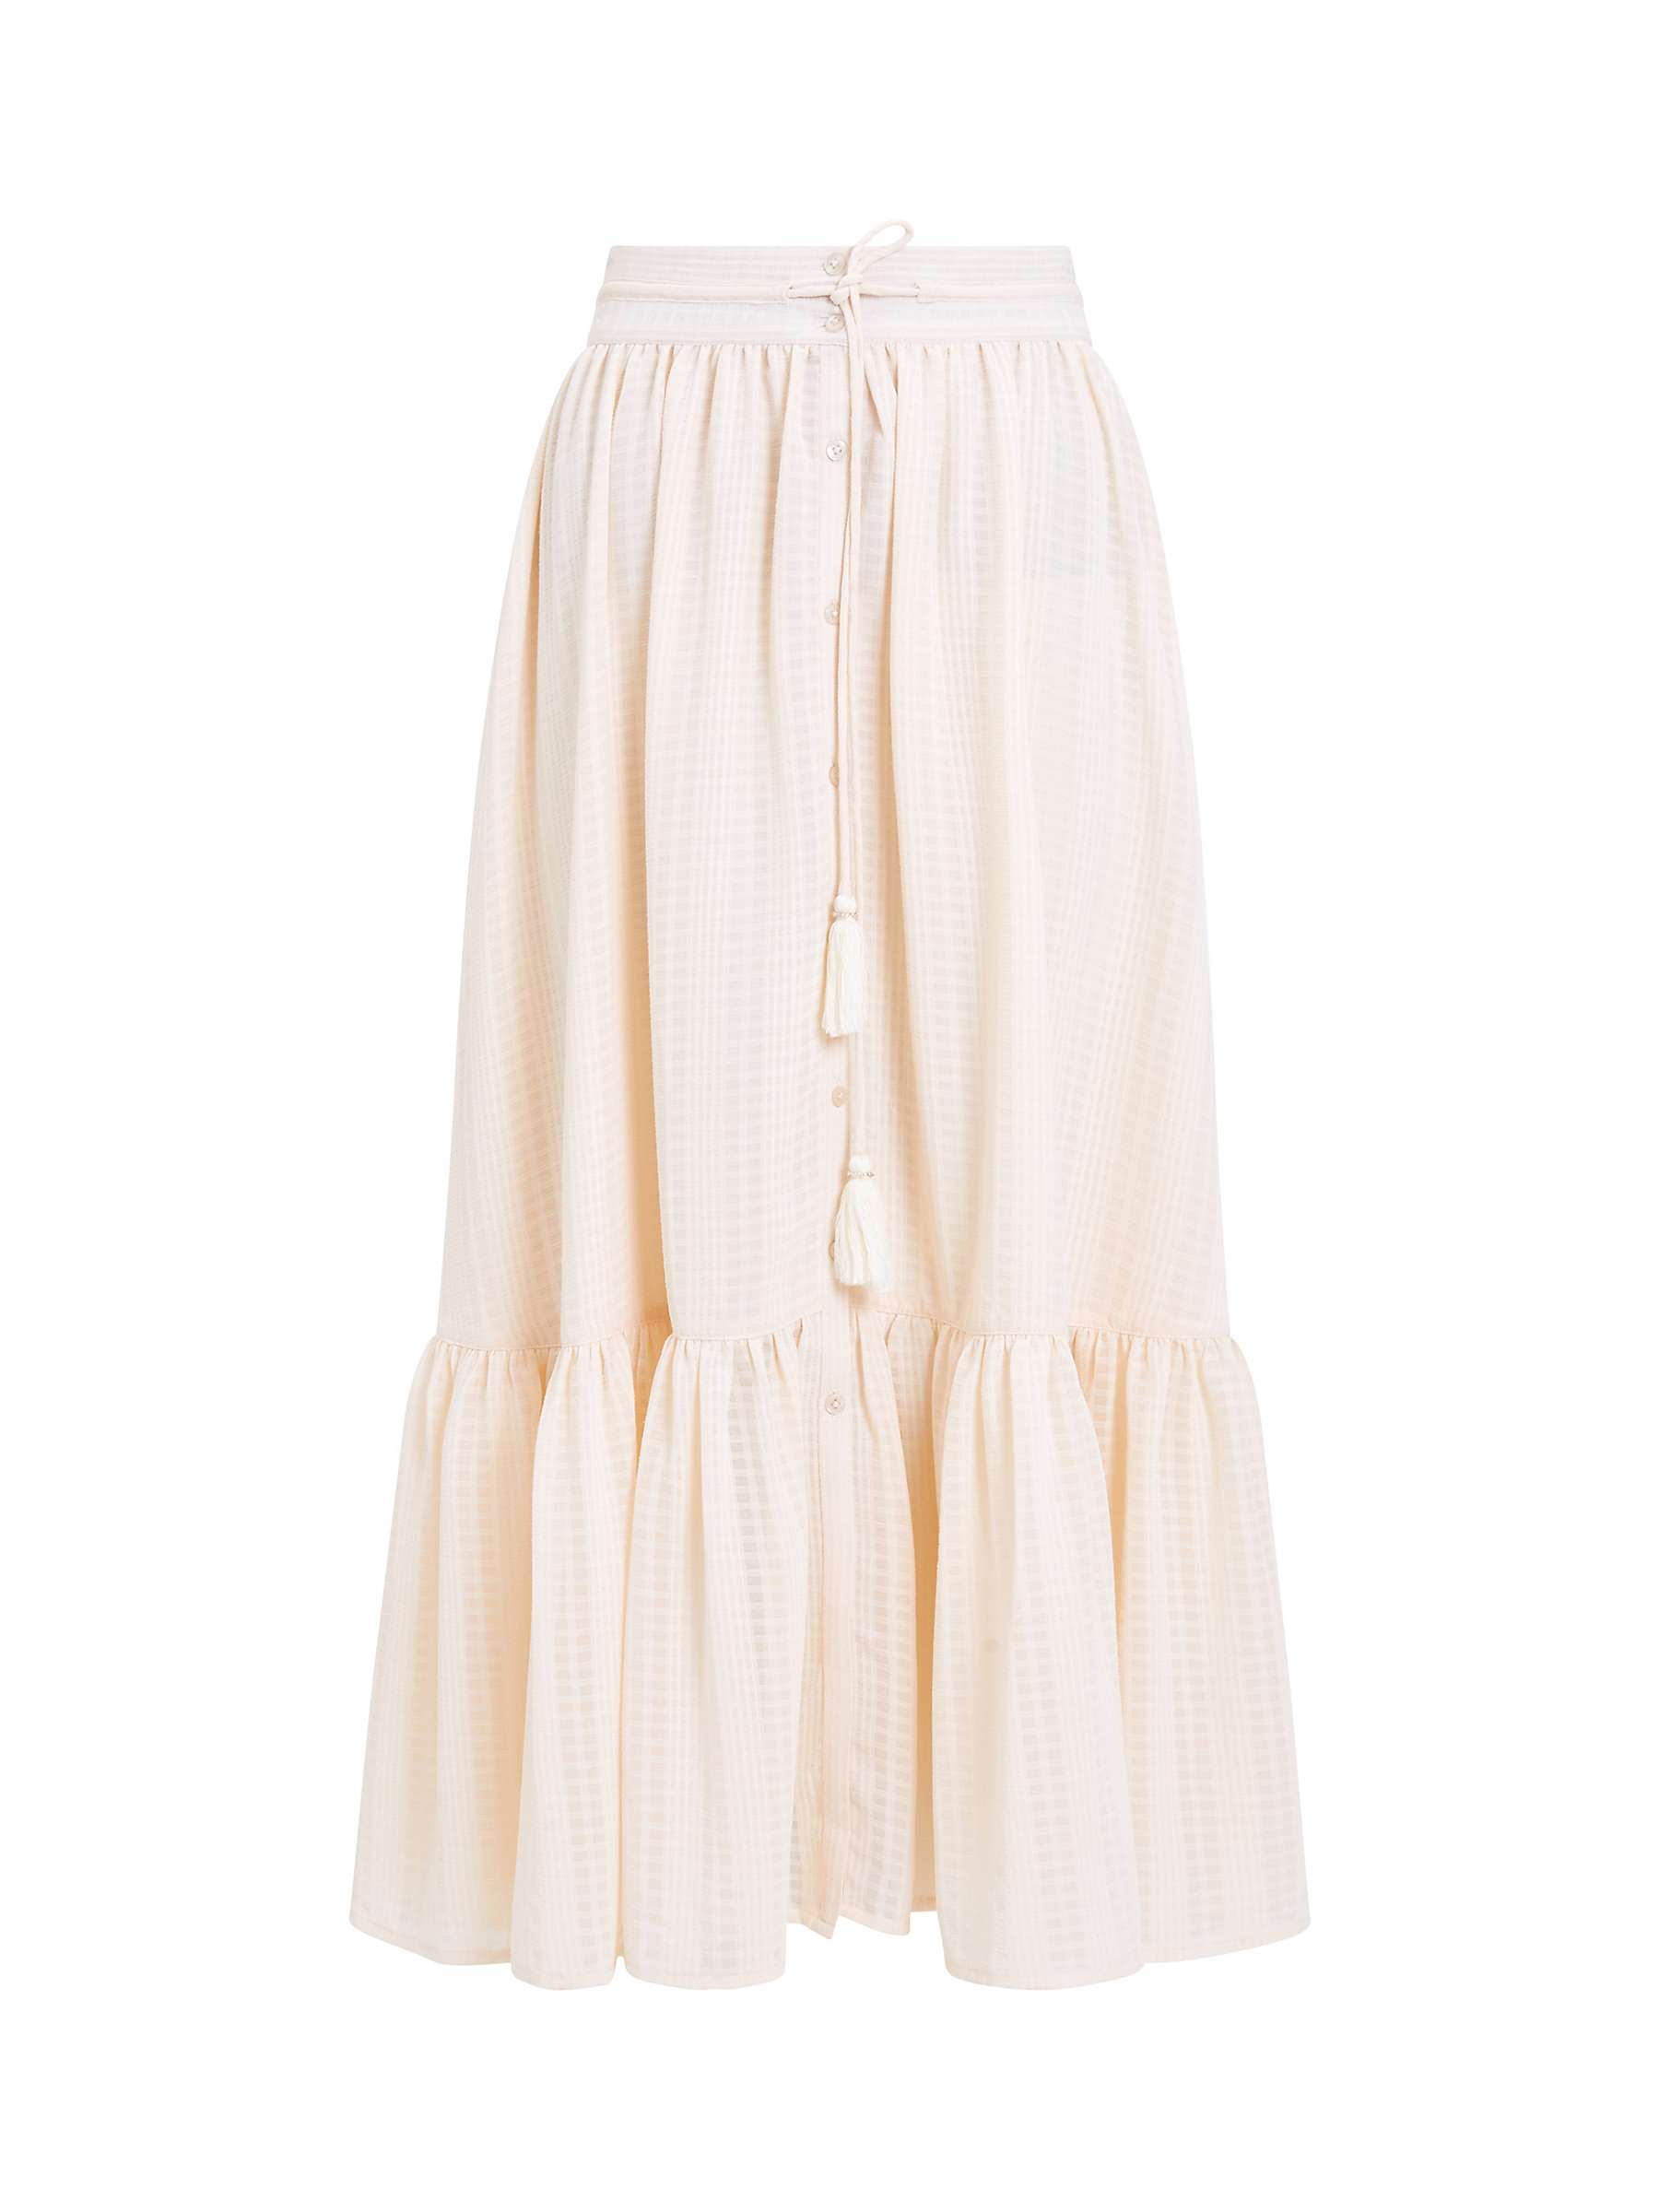 Buy Great Plains Desert Check Tiered Skirt, Ecru Online at johnlewis.com